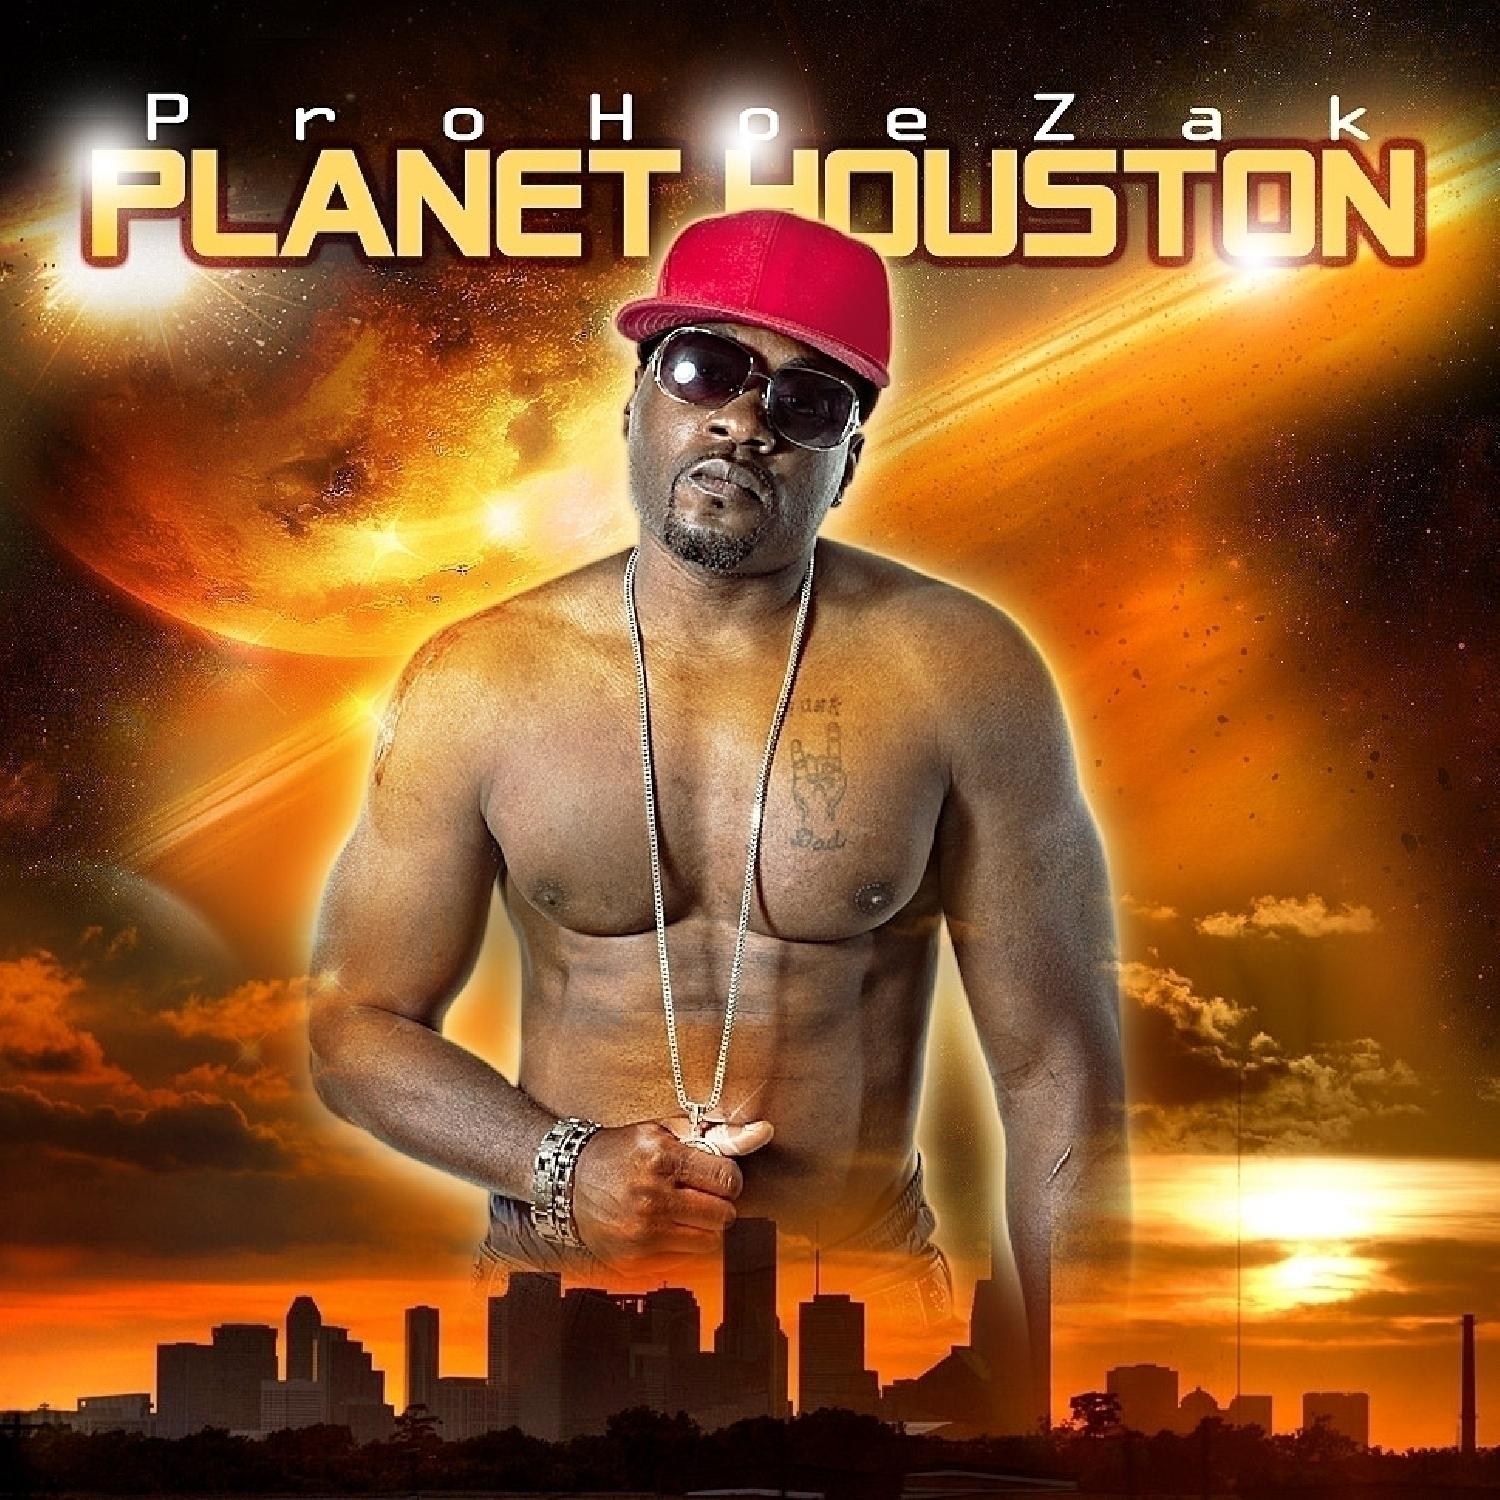 Shout Out Planet Houston